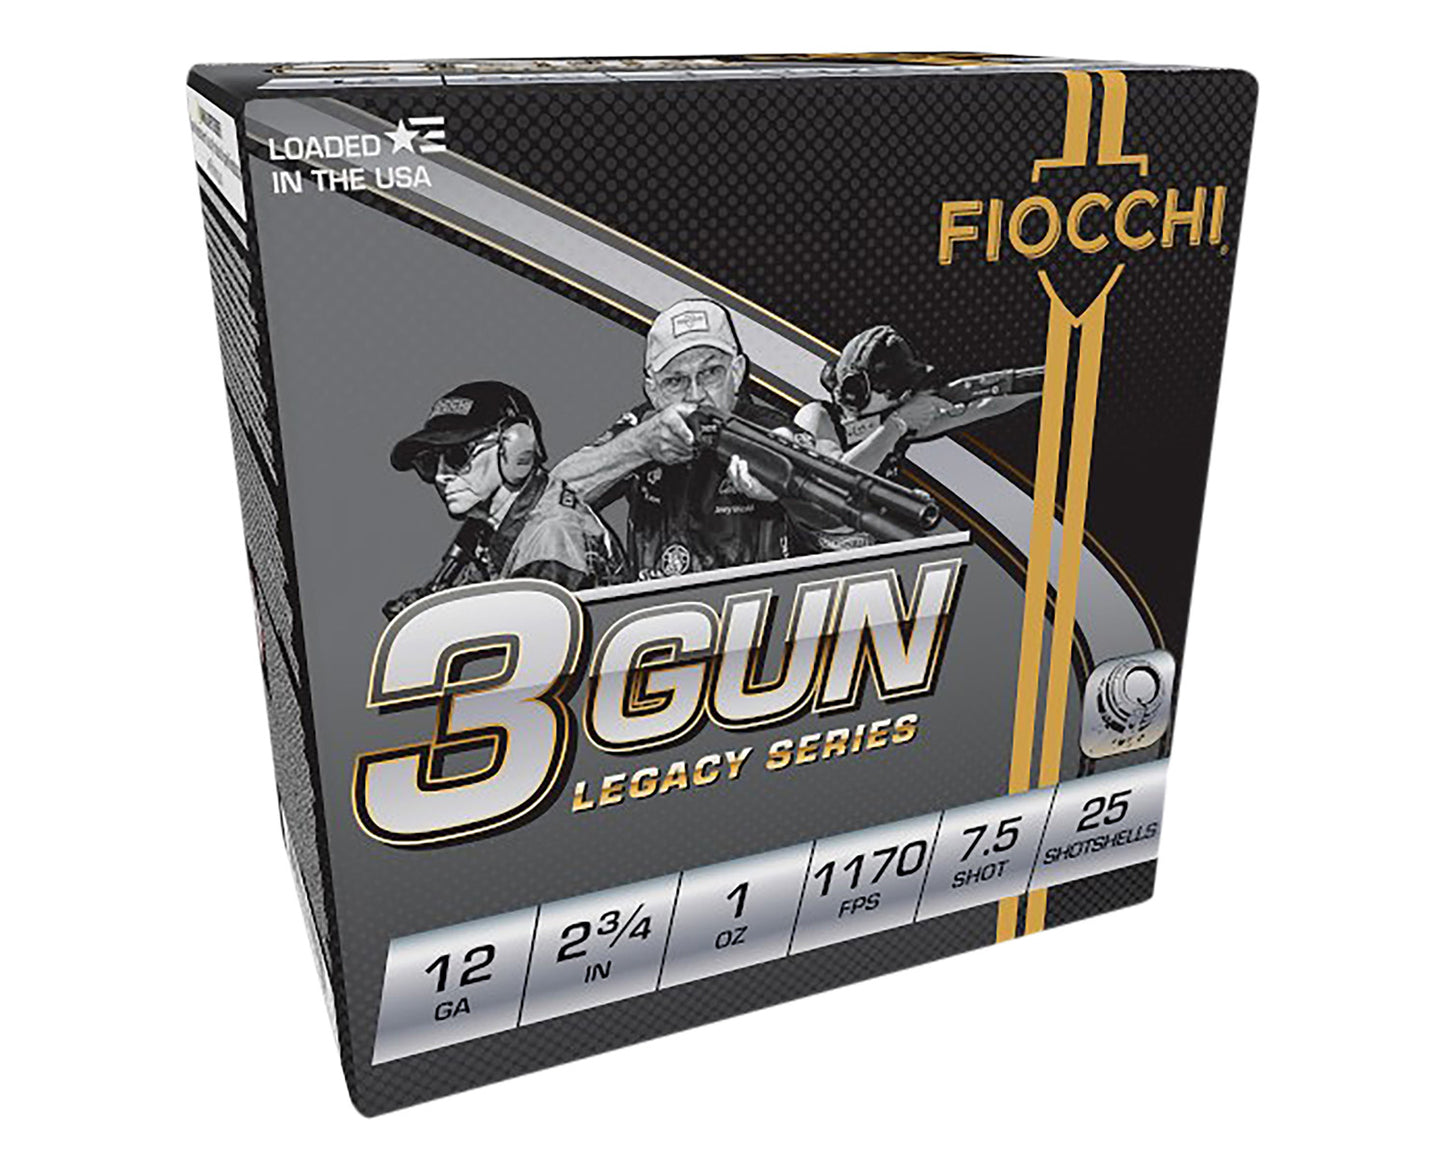 Fiocchi 12DL3G75 3-Gun Match Legacy Series 12 Gauge 2.75" 1 oz 7.5 Shot 25 Per Box/ 10 Cs